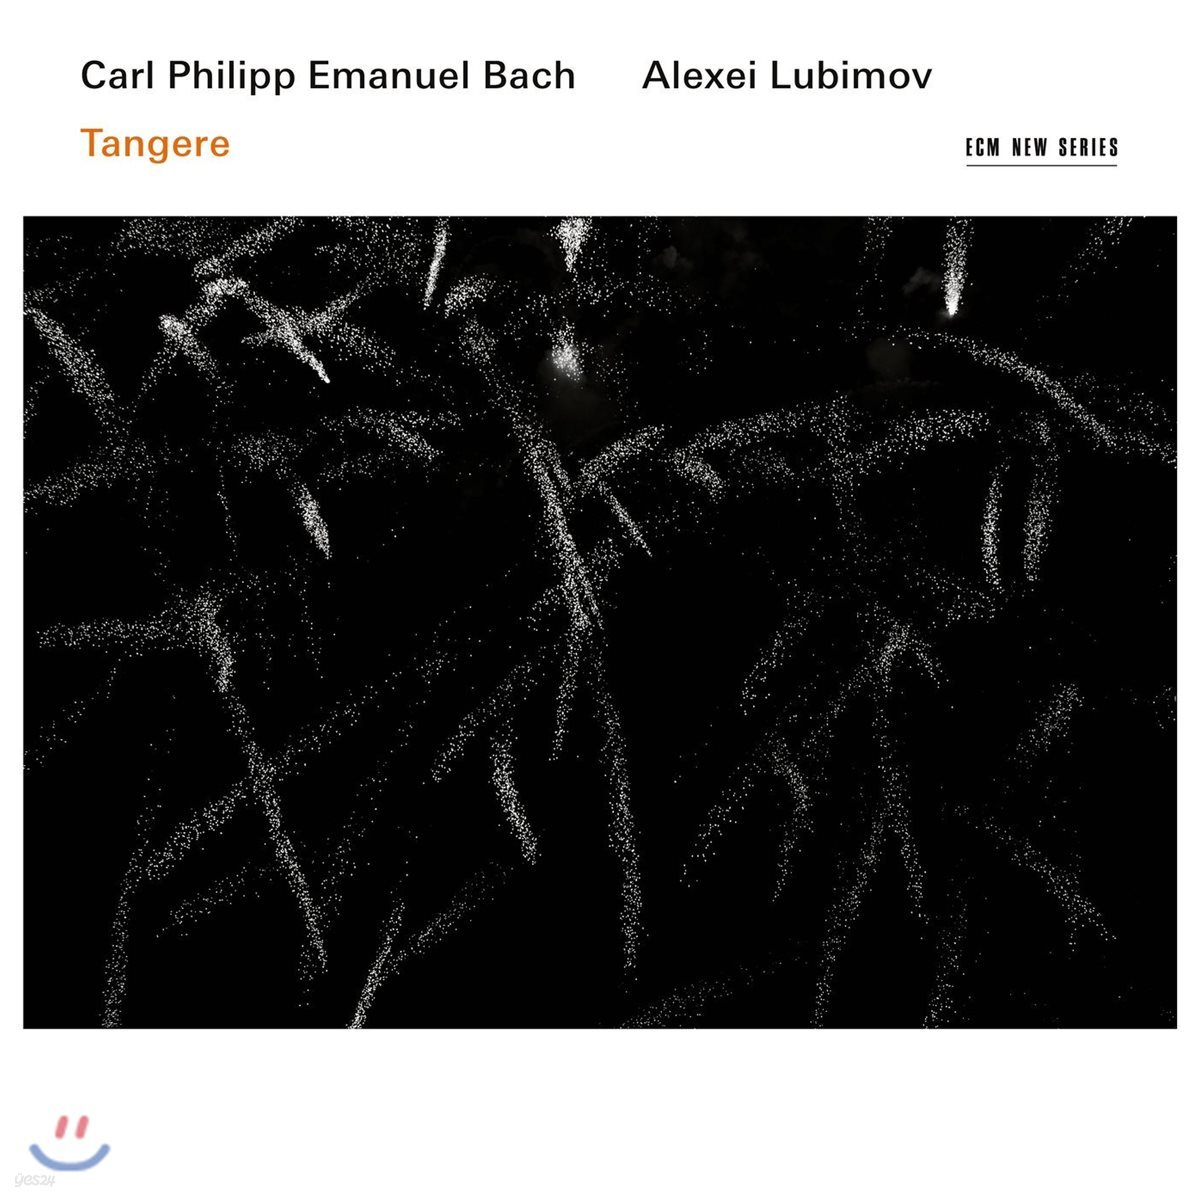 Alexei Lubimov 칼 필립 엠마누엘 바흐: 건반 음악 (CPE Bach: Tangere)